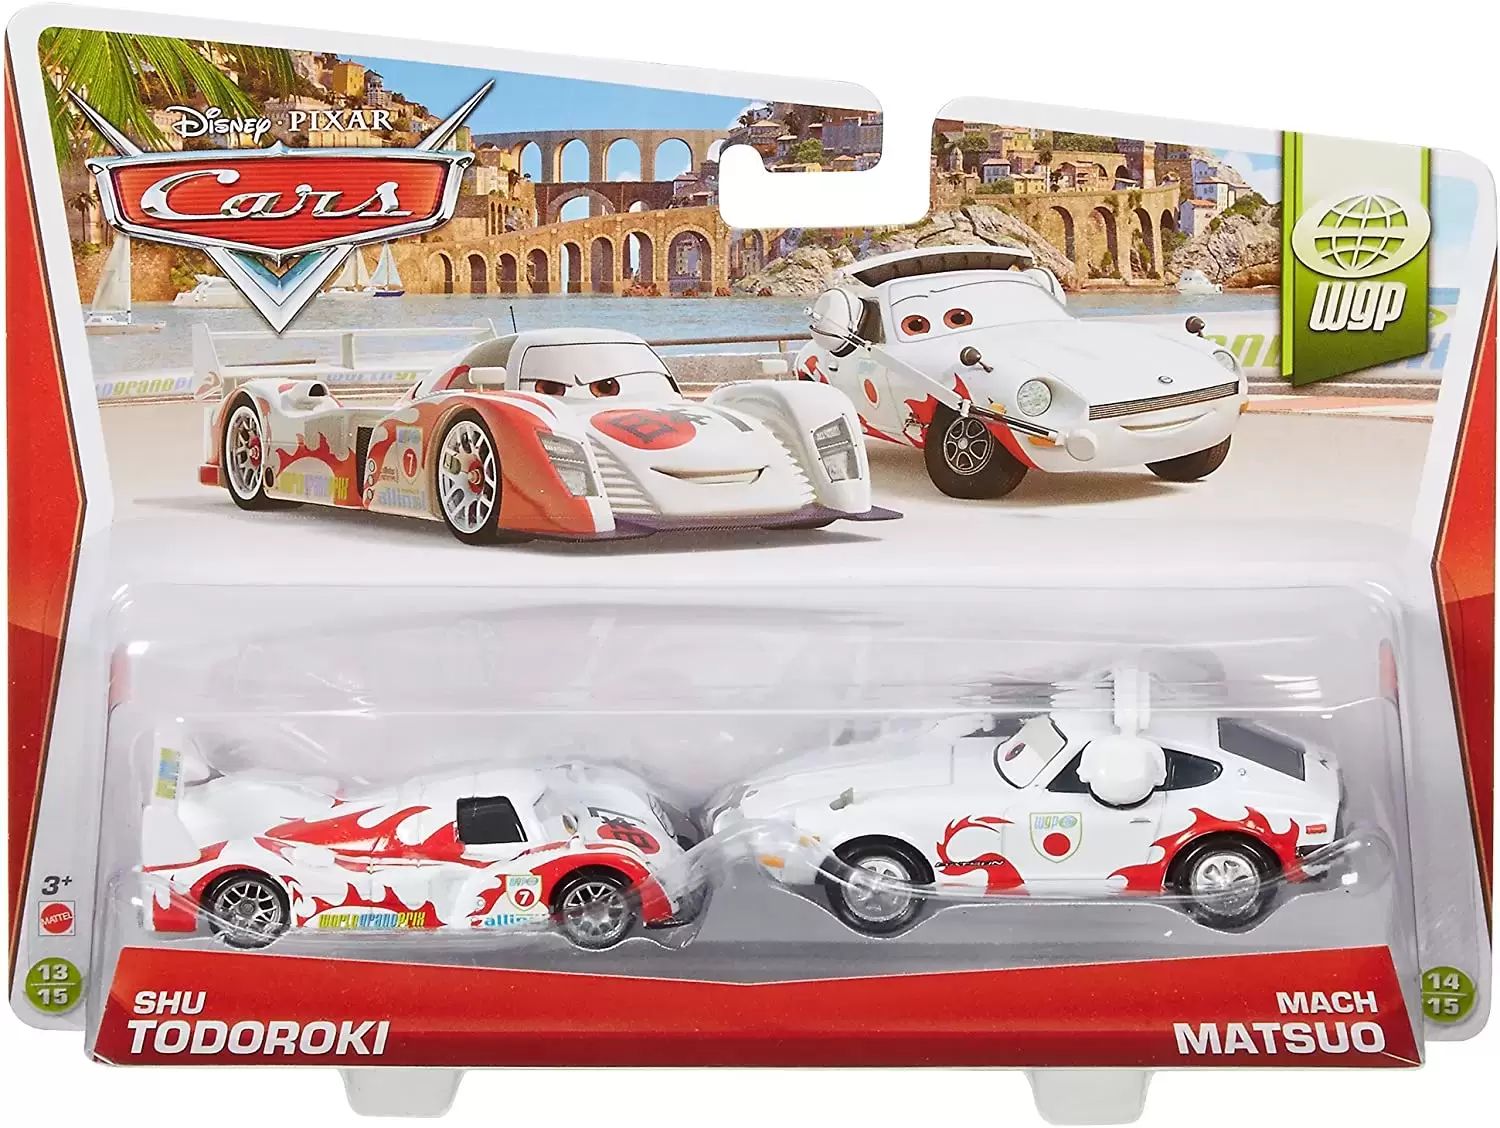 Cars 2 models - Shu Todoroki & Mach Matsuo